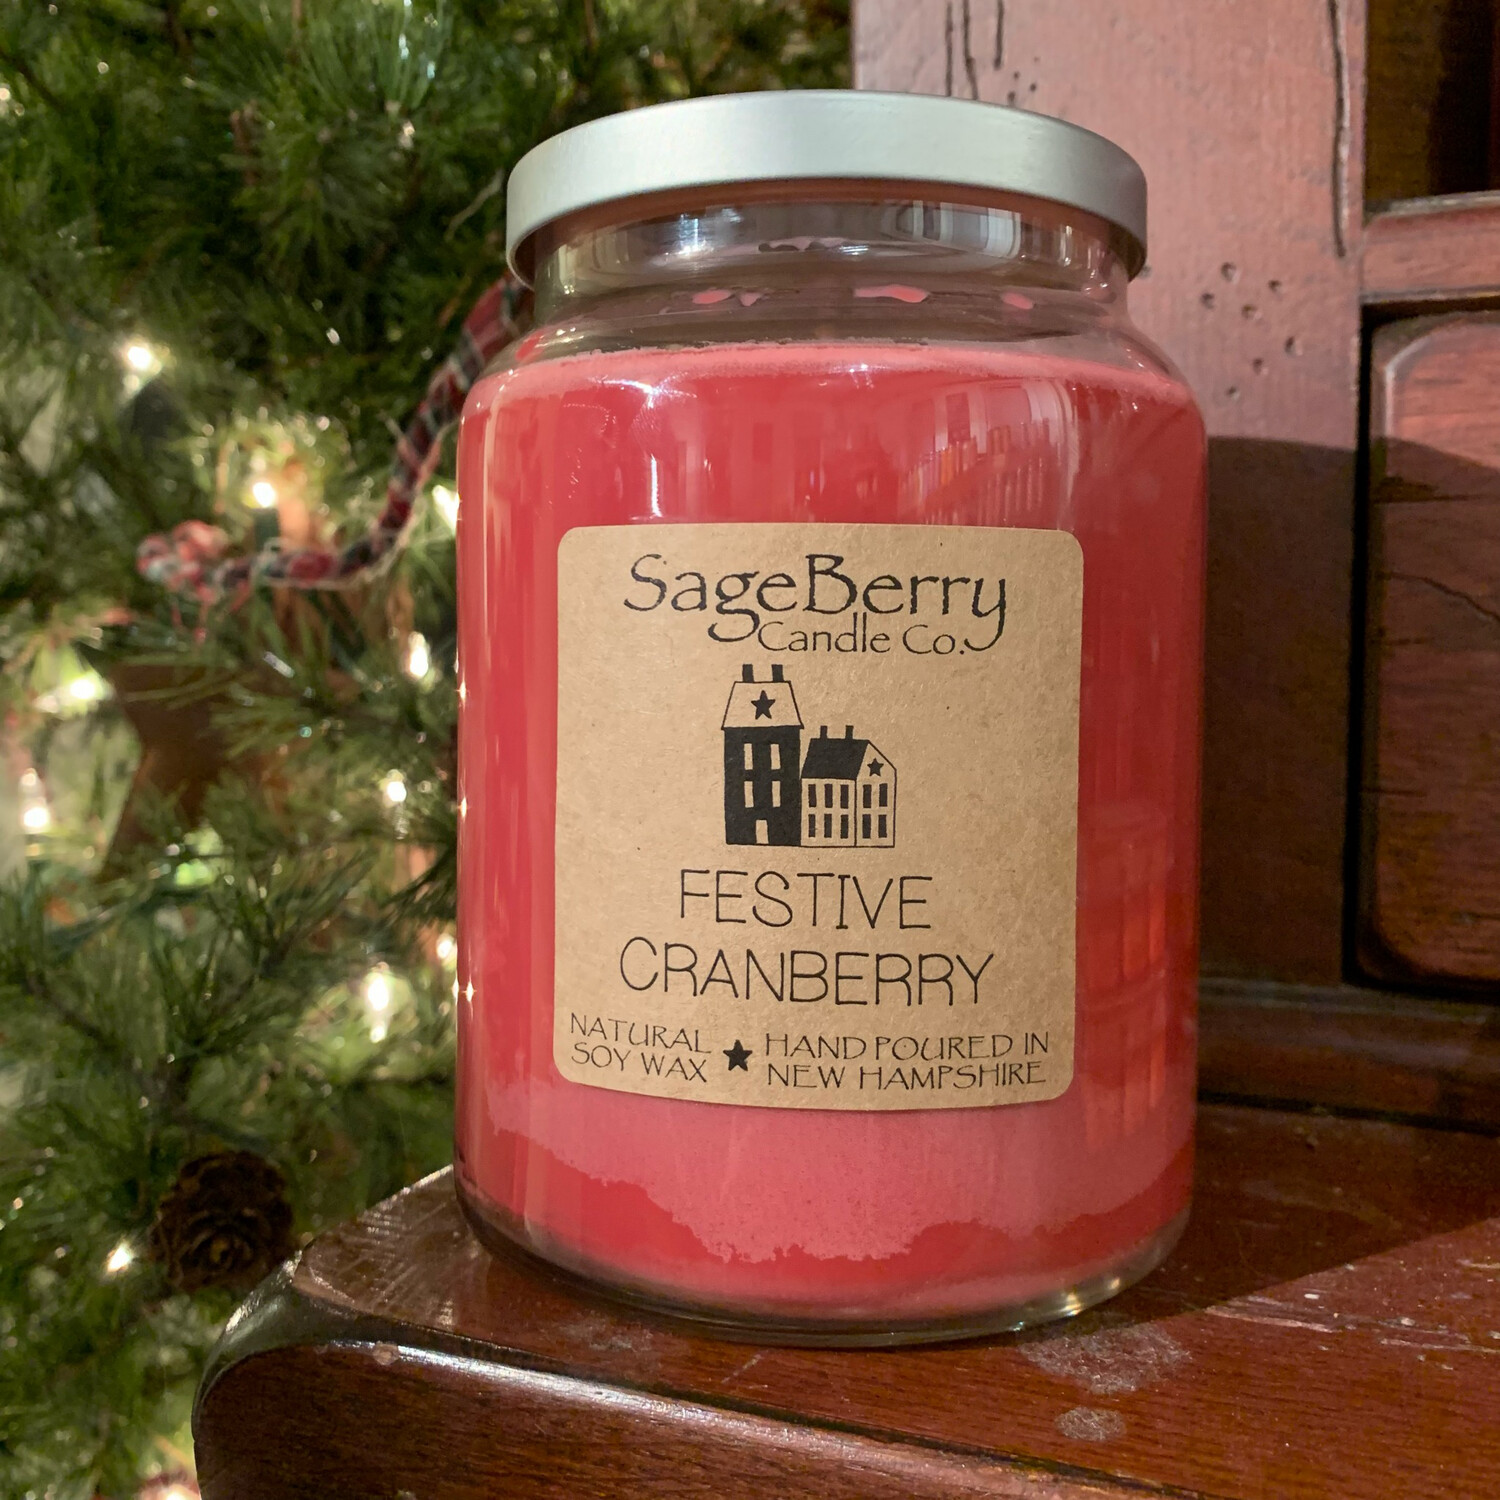 Festive Cranberry